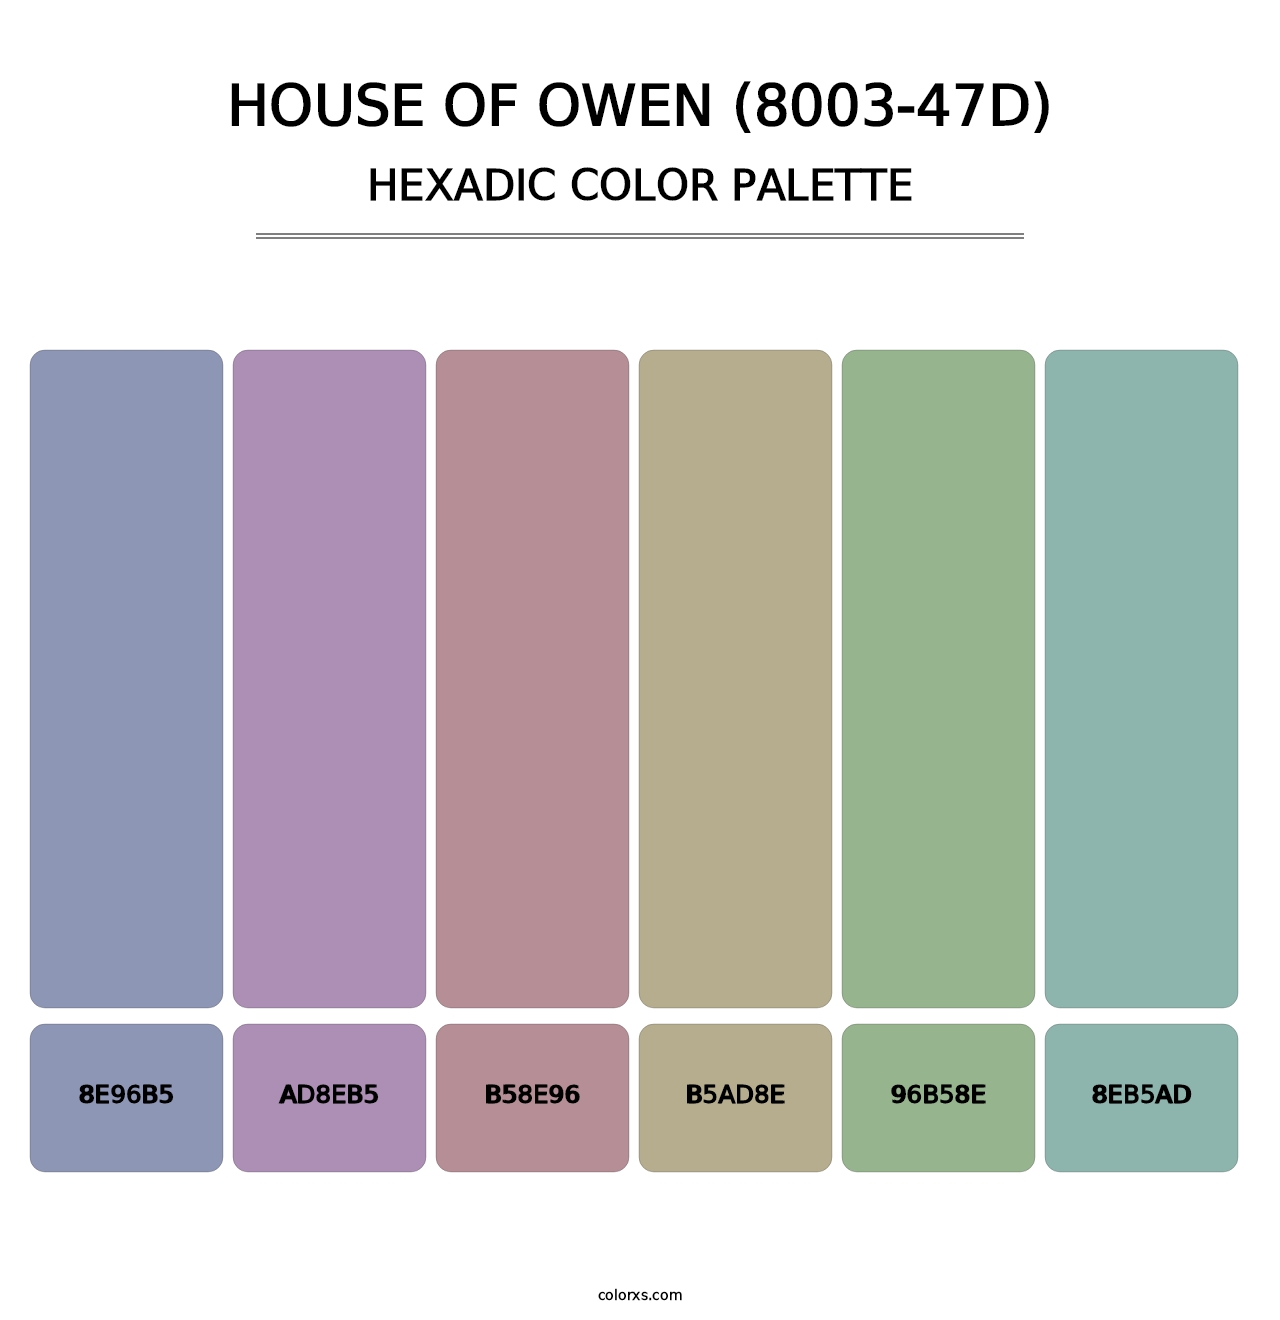 House of Owen (8003-47D) - Hexadic Color Palette